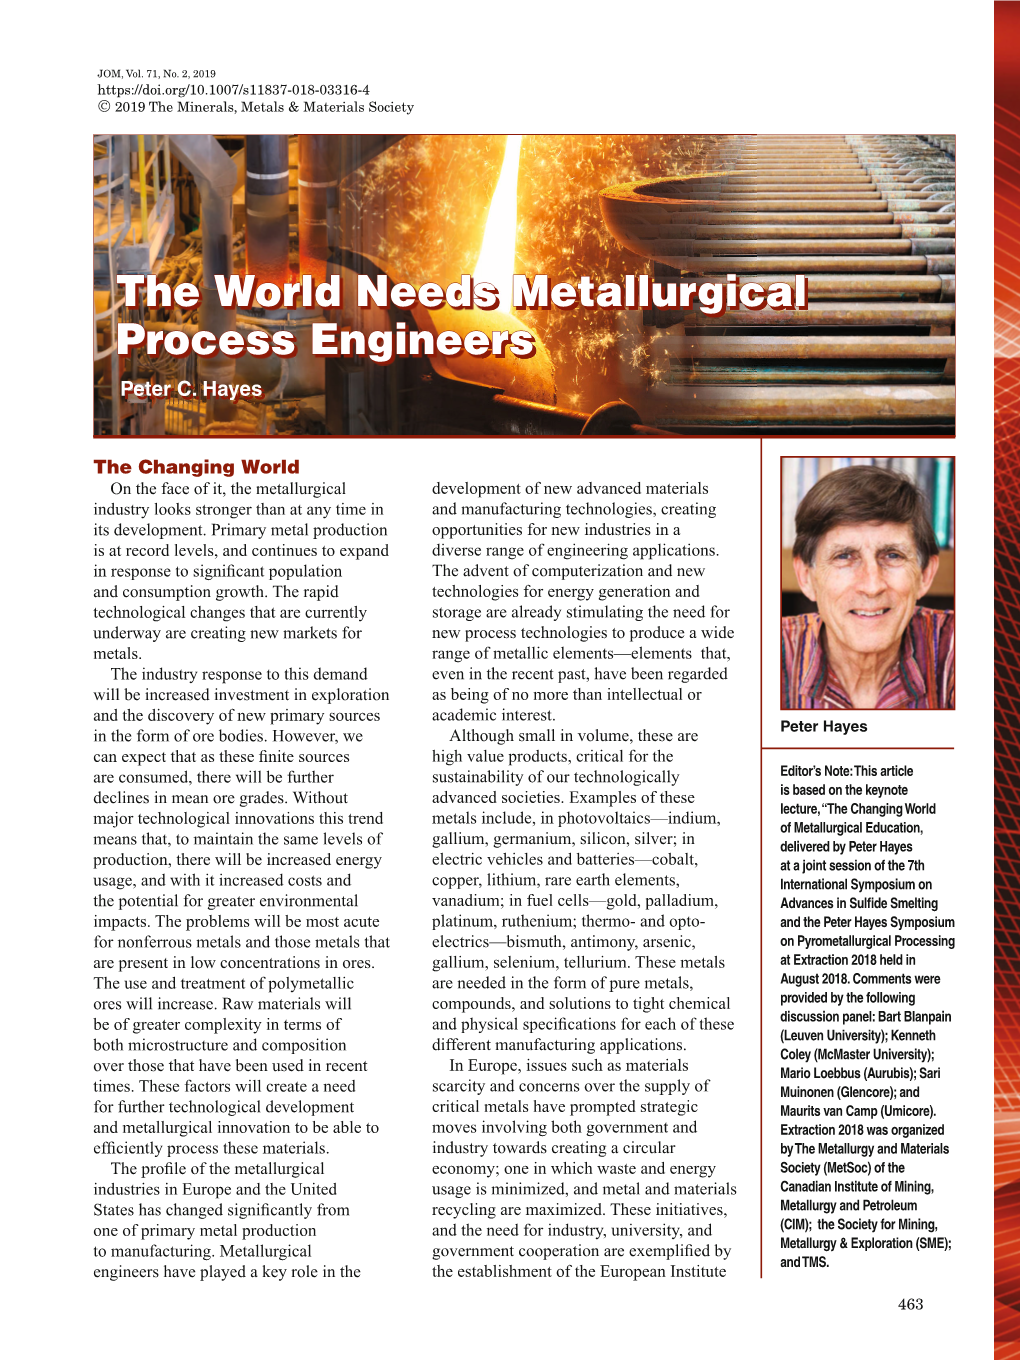 The World Needs Metallurgical Process Engineers Peter C